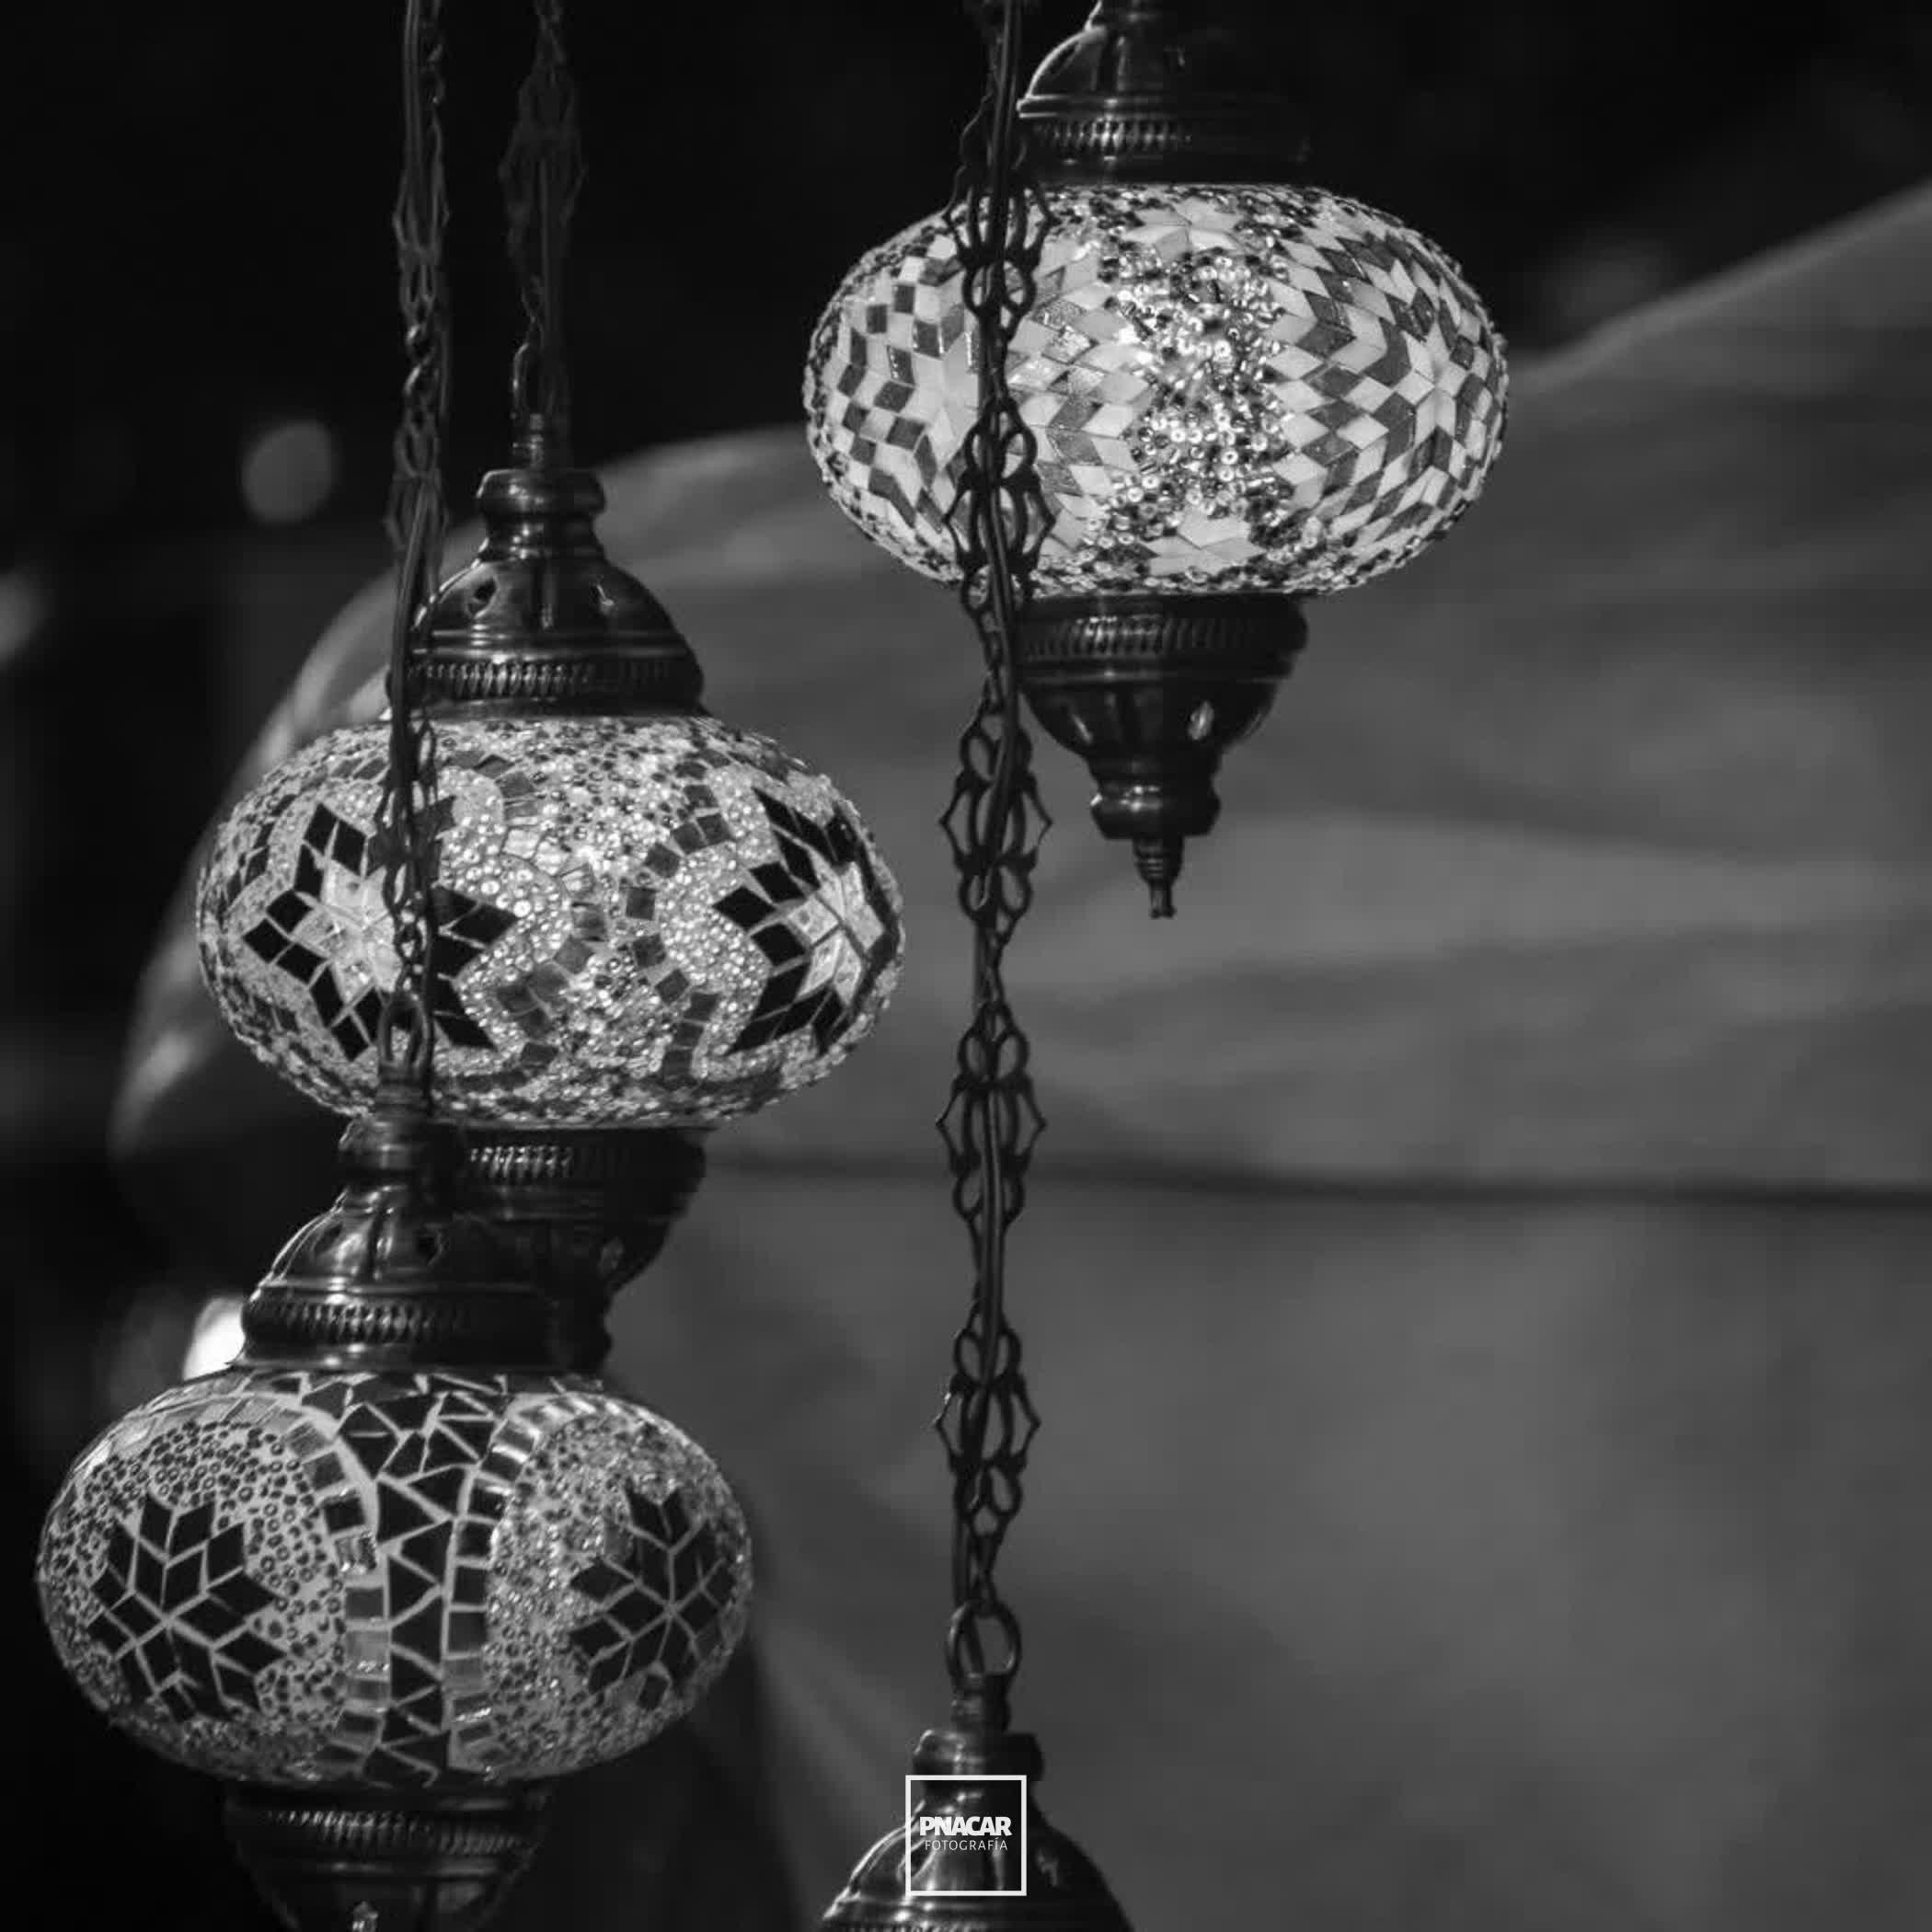 Arab Lamps at the Medieval Market at Avila, Spain